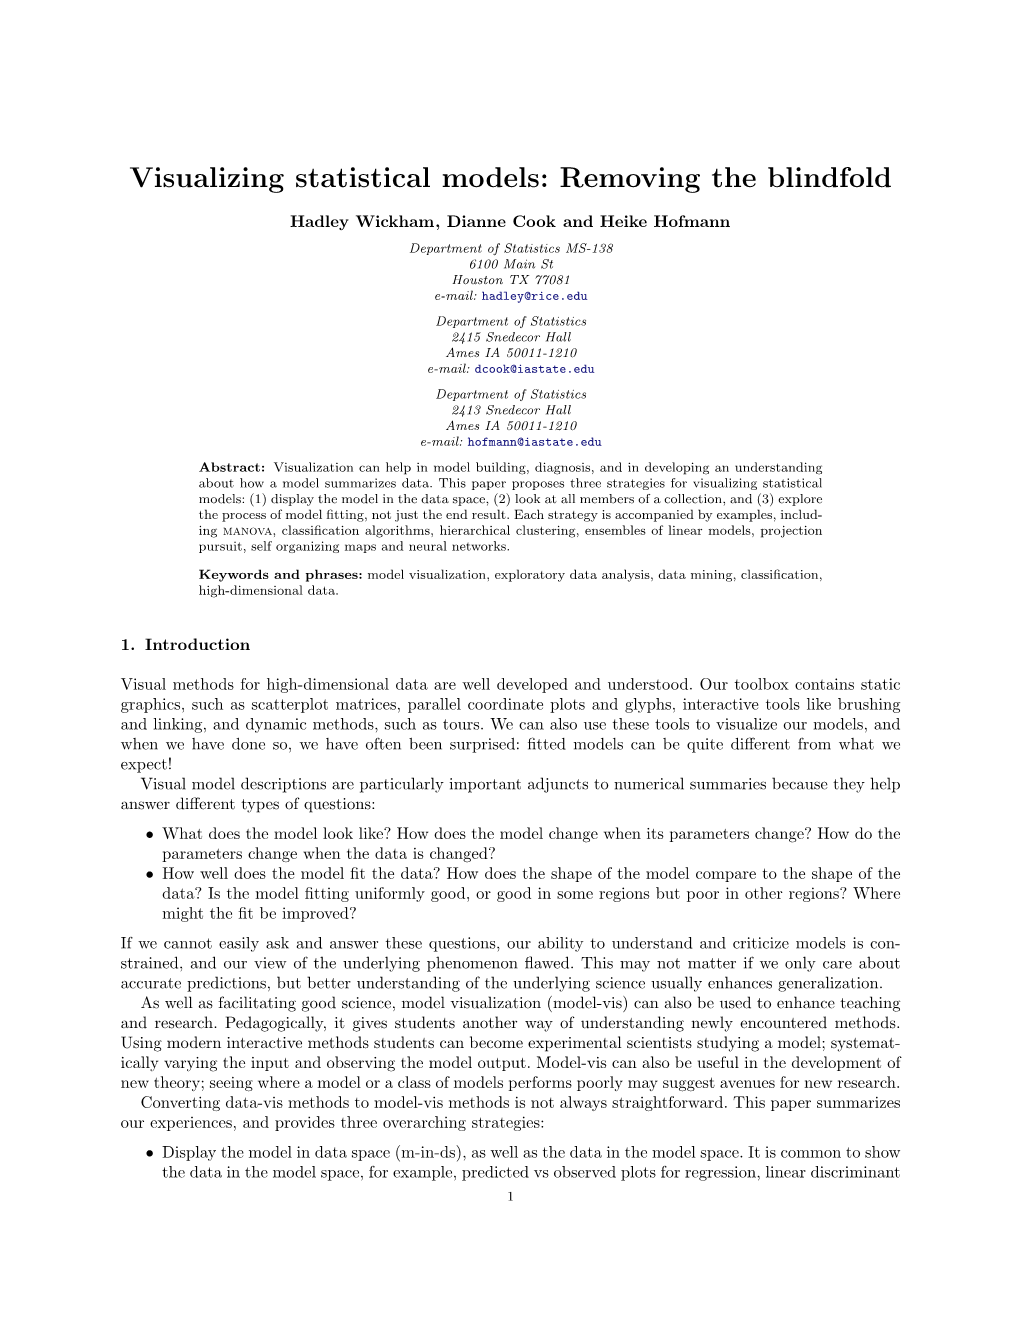 Visualizing Statistical Models: Removing the Blindfold